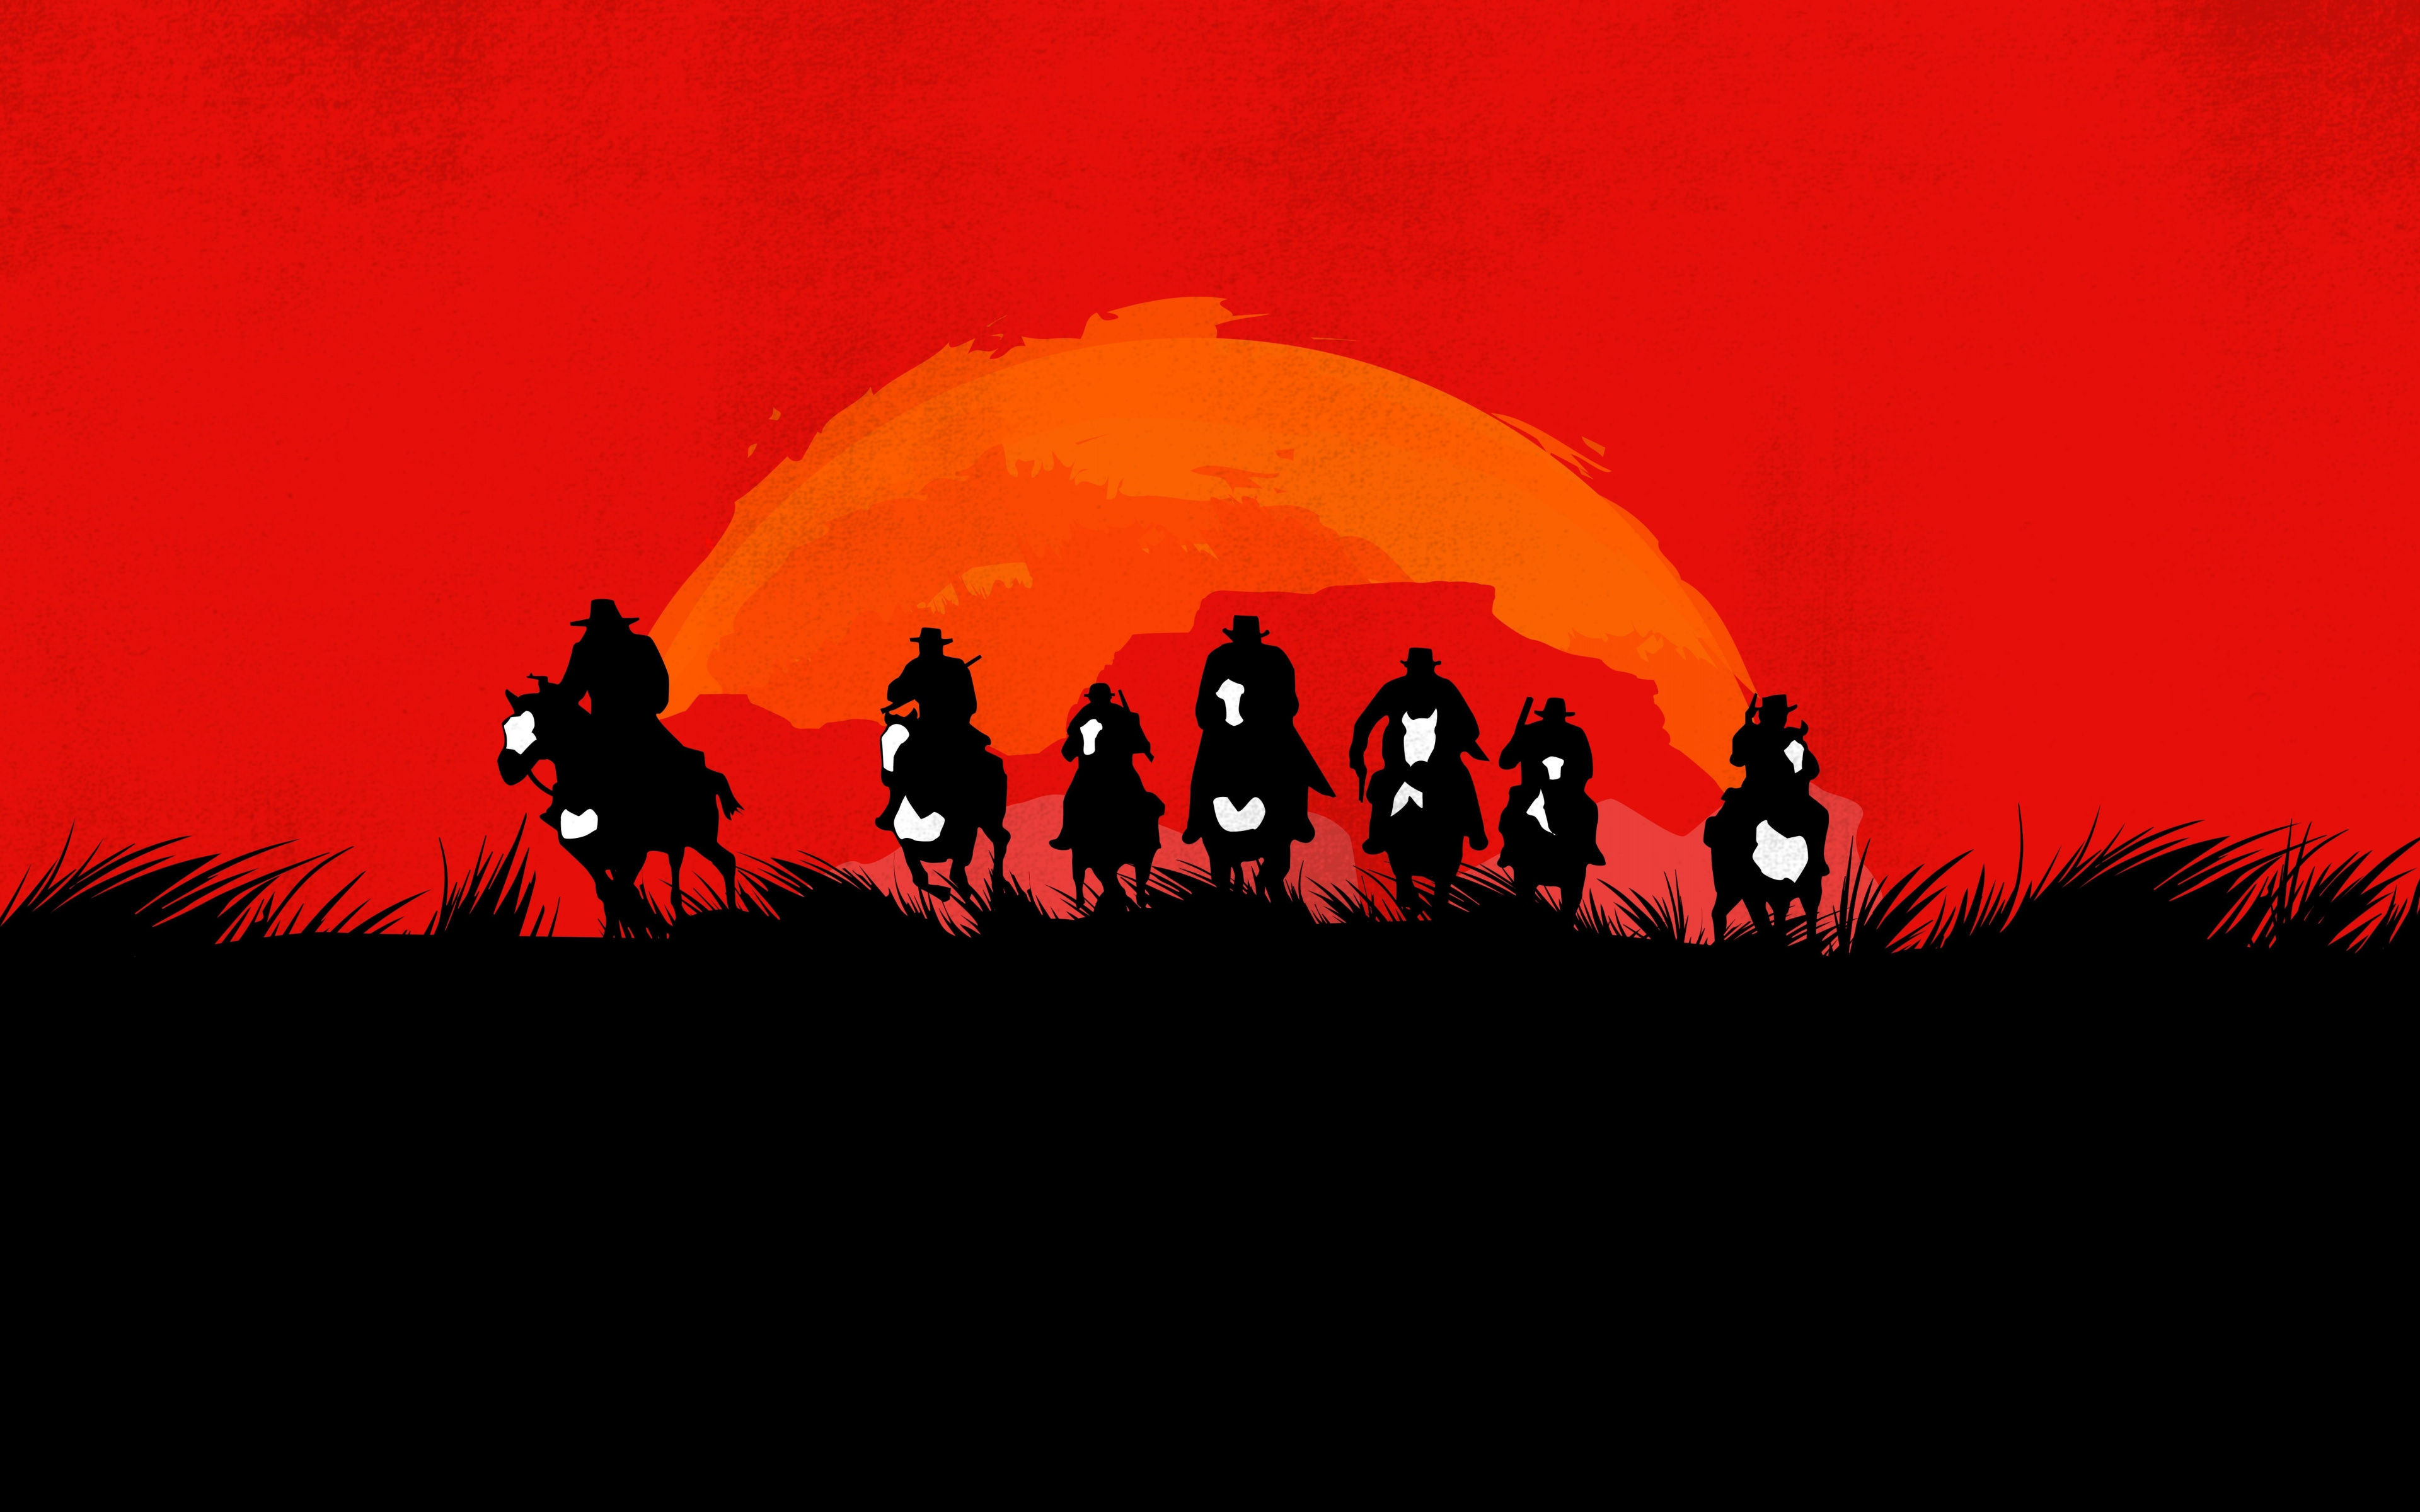 Red Dead Redemption 2 4K Wallpaper